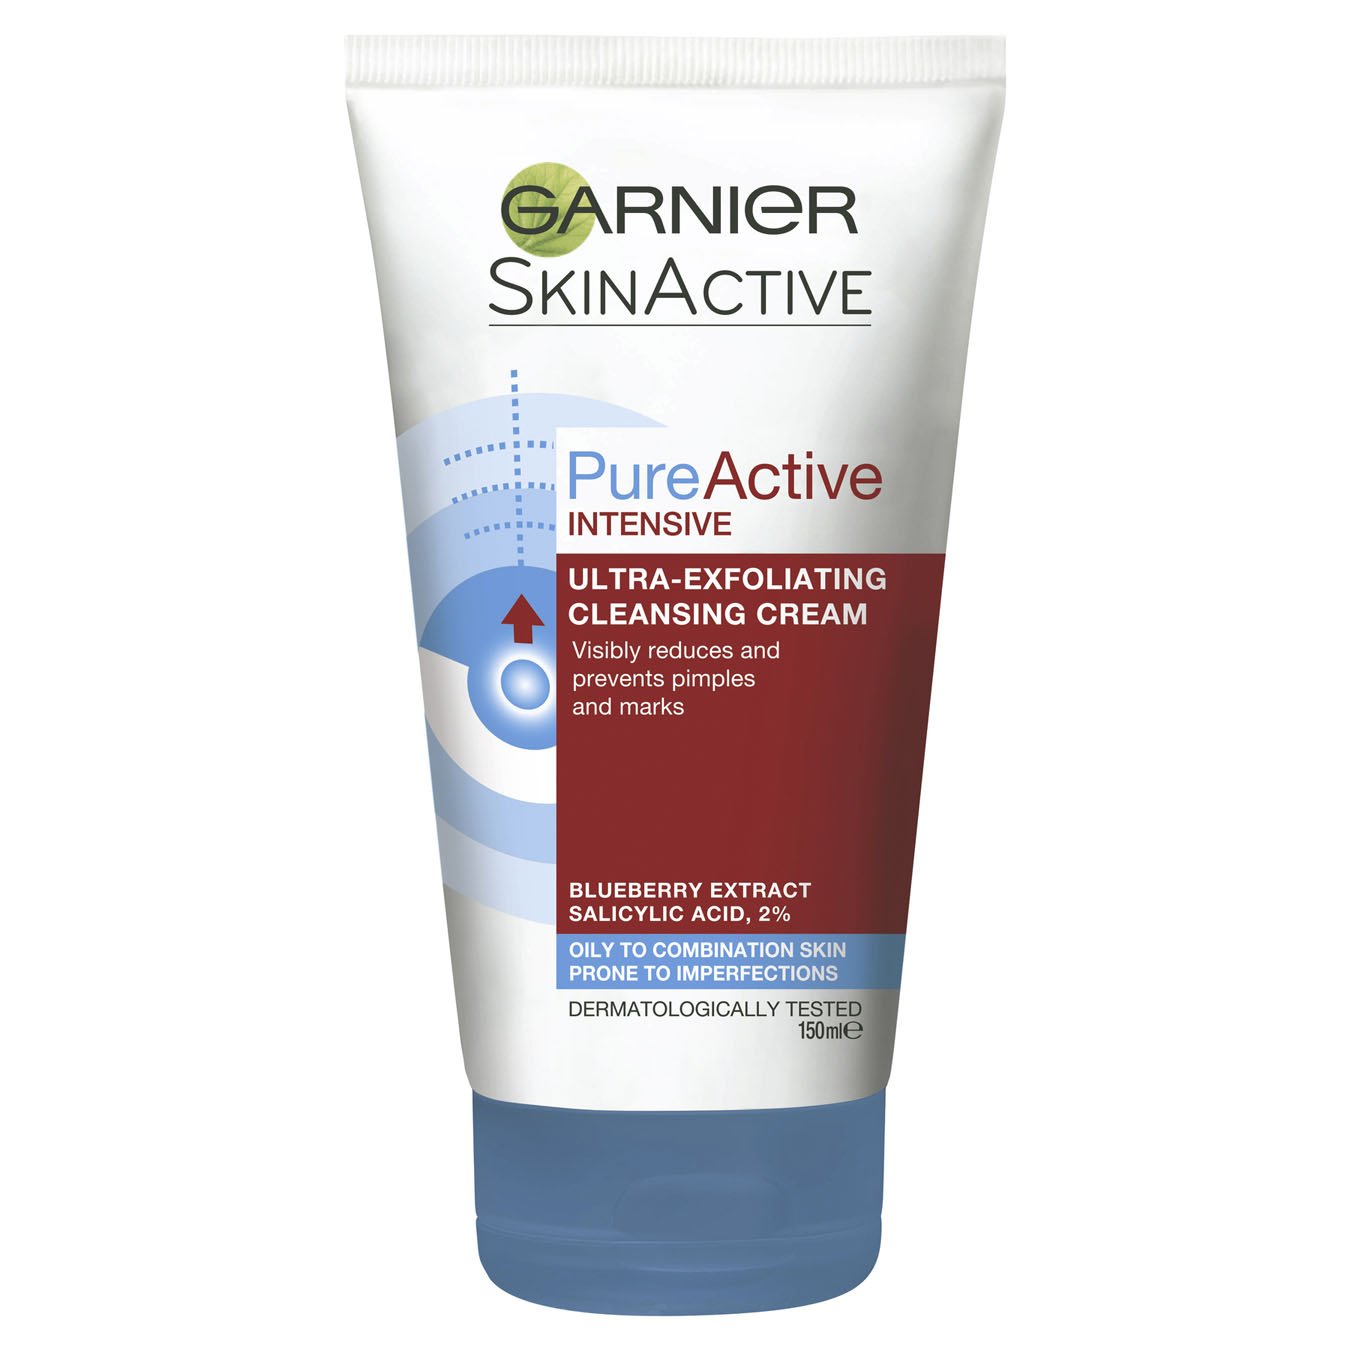 Pure Active Intensive Exfoliating Cleansing Cream